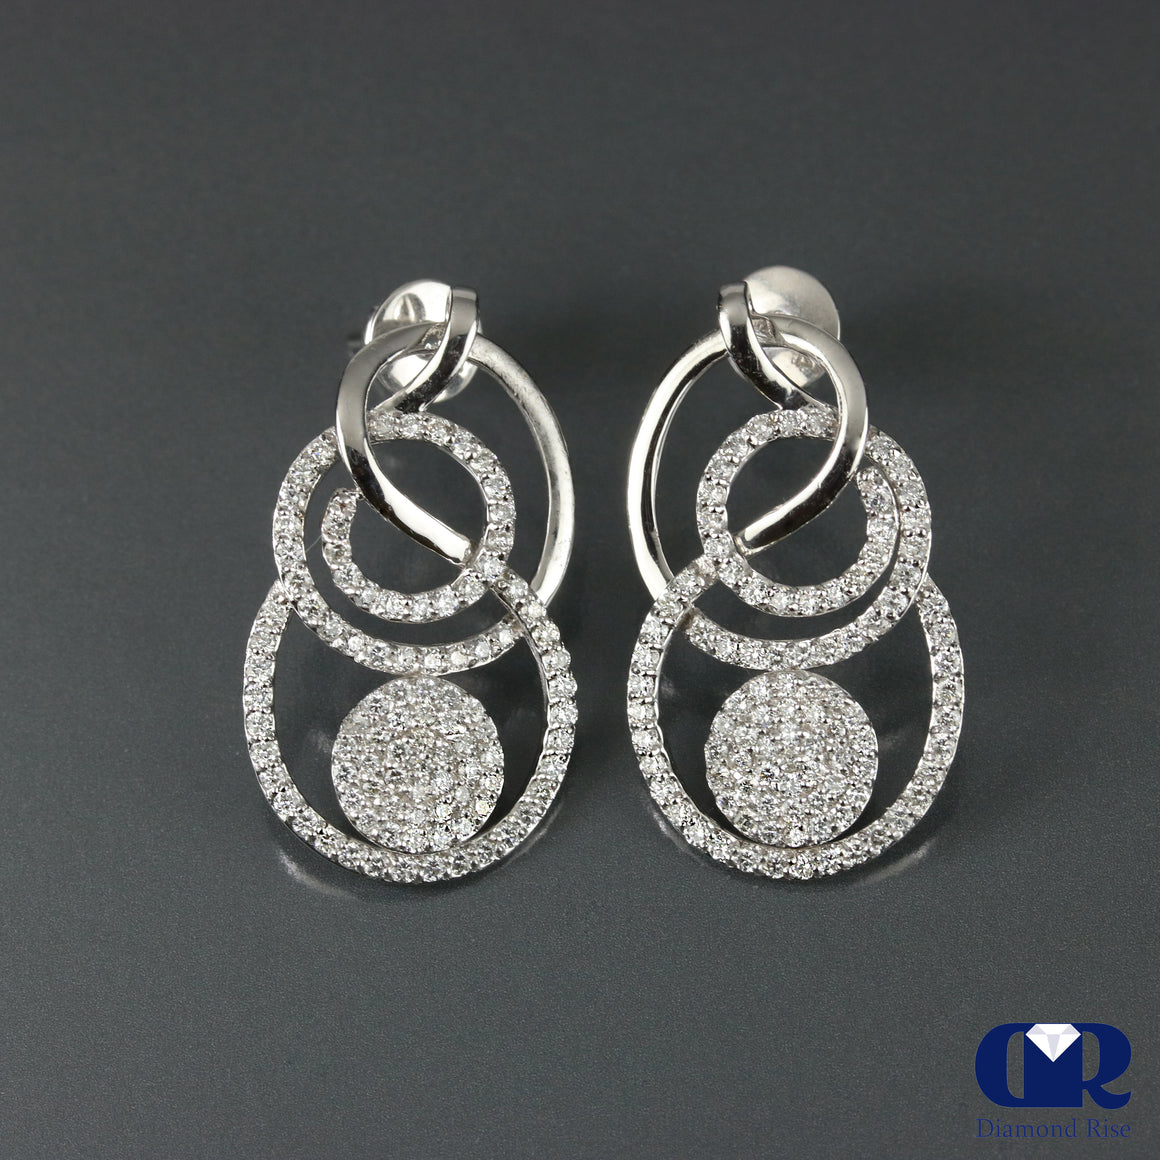 1.10 Ct Diamond Loop Drop Earrings In 14K Gold With Post - Diamond Rise Jewelry